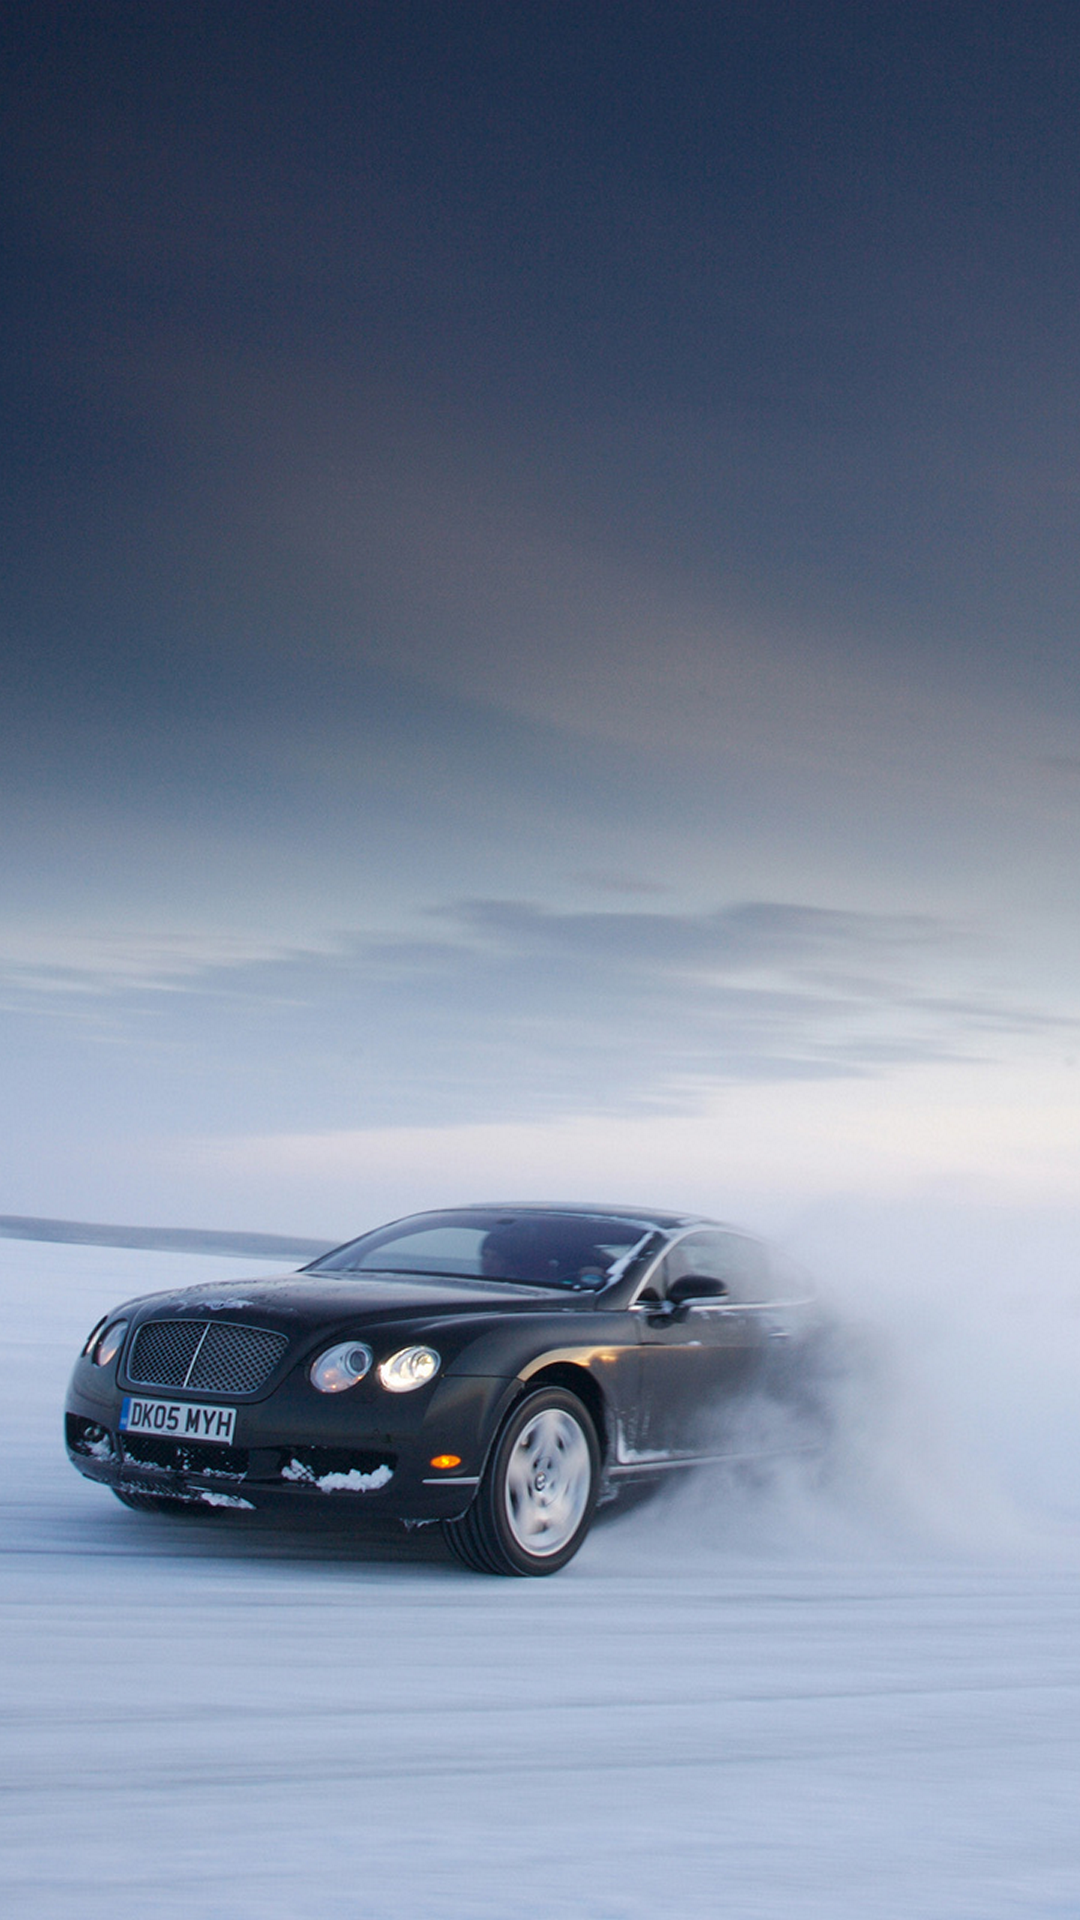 Bentley Continental GT on Snow for Samsung Galaxy S4, sfondi samsung galaxy s4, hintergrund, full size HD 1080x1920, portrait mode